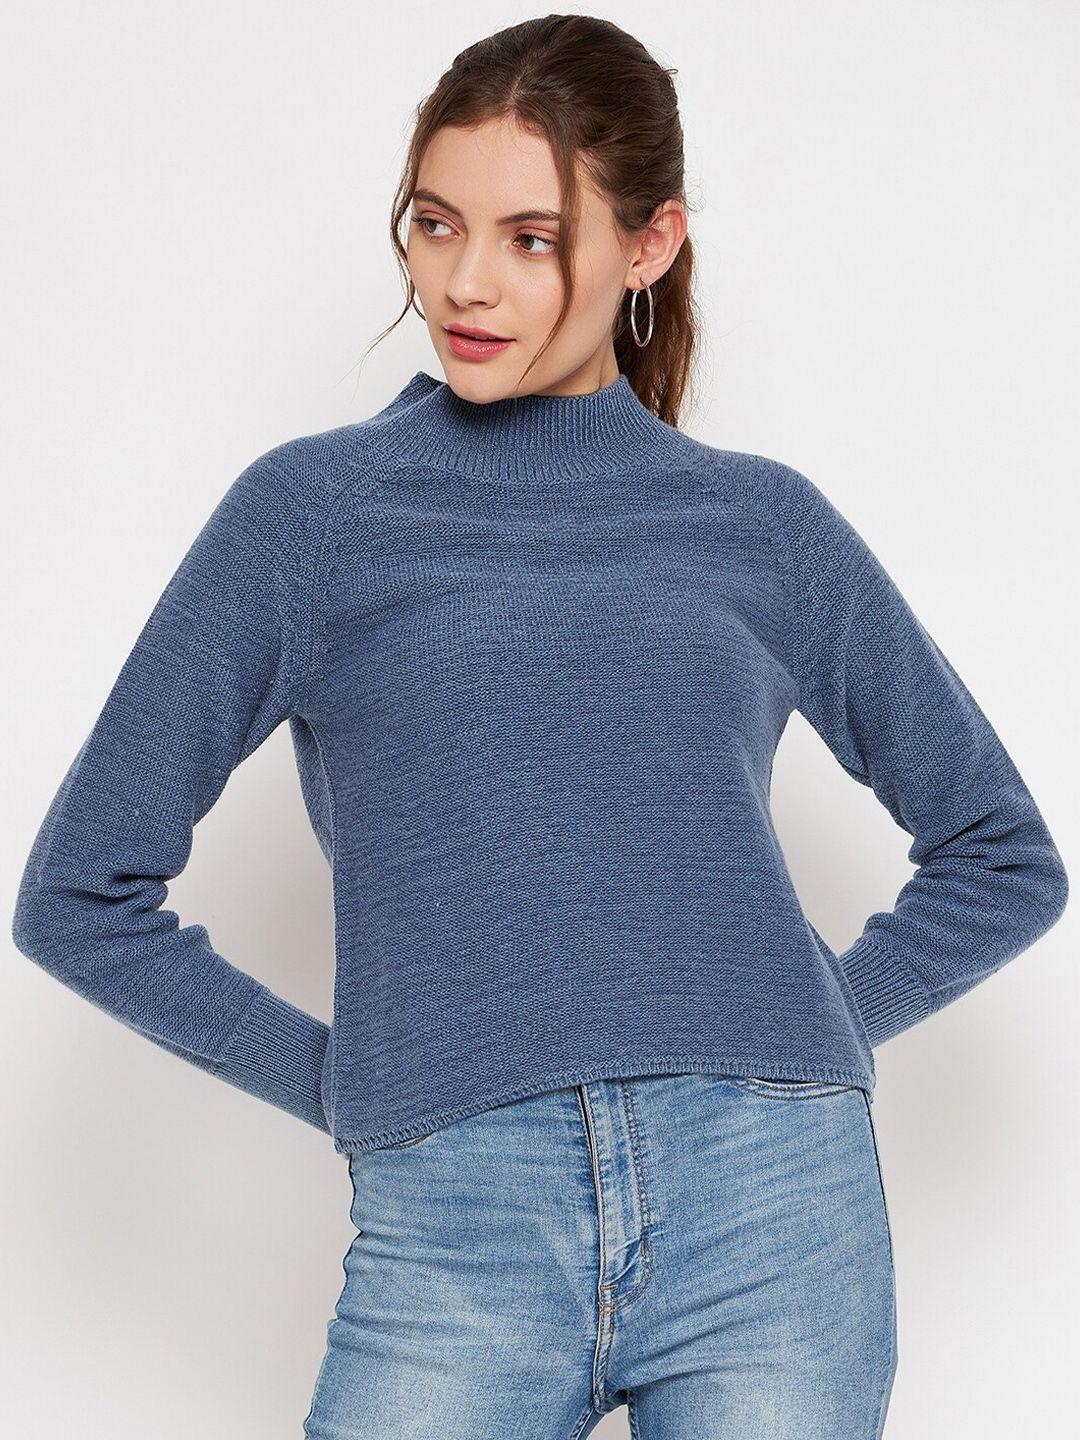 camla-women-blue-sweater-vest